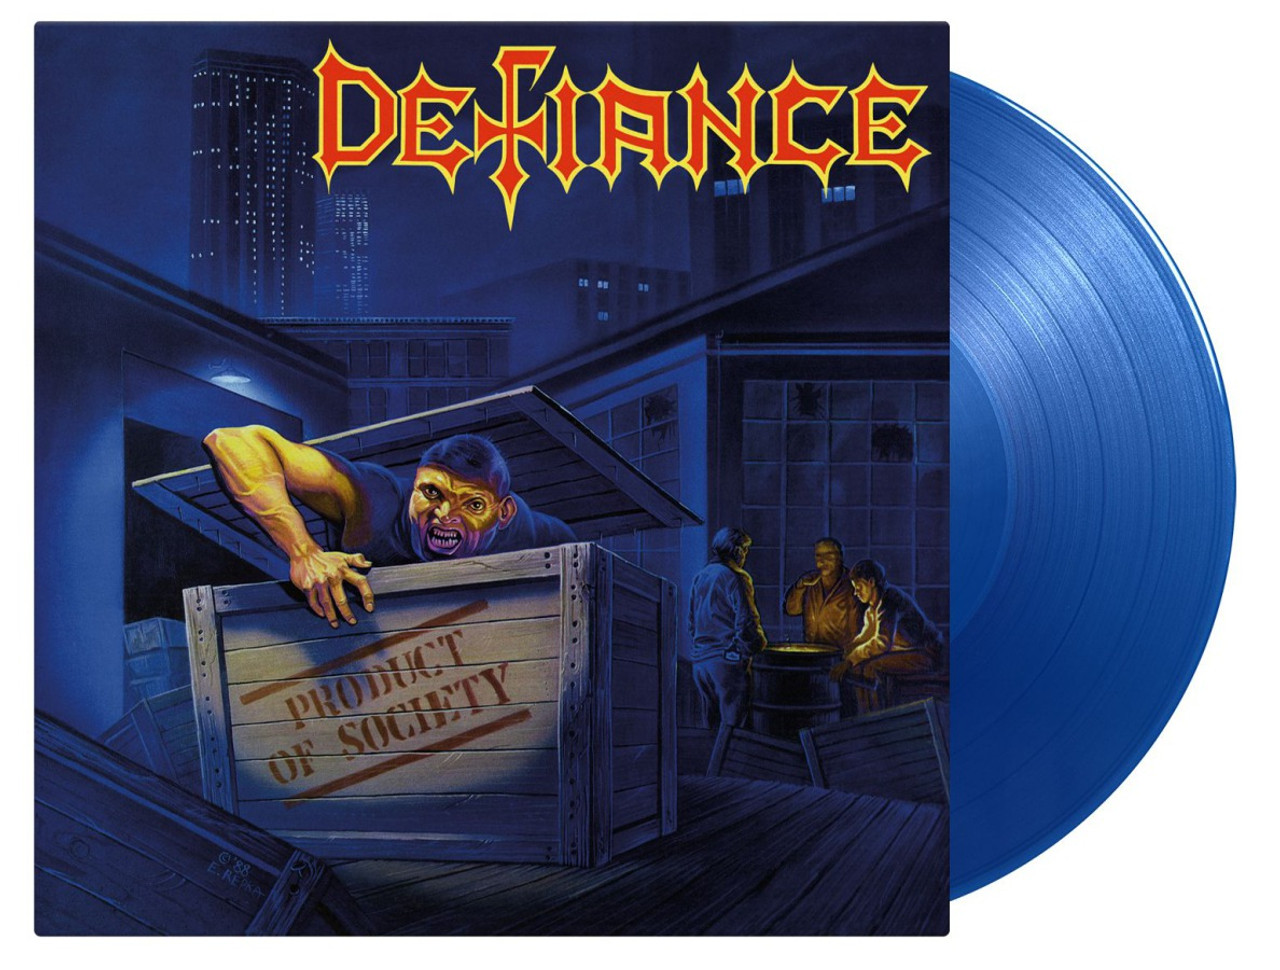 Defiance 'Product of Society' LP 180g Blue Vinyl